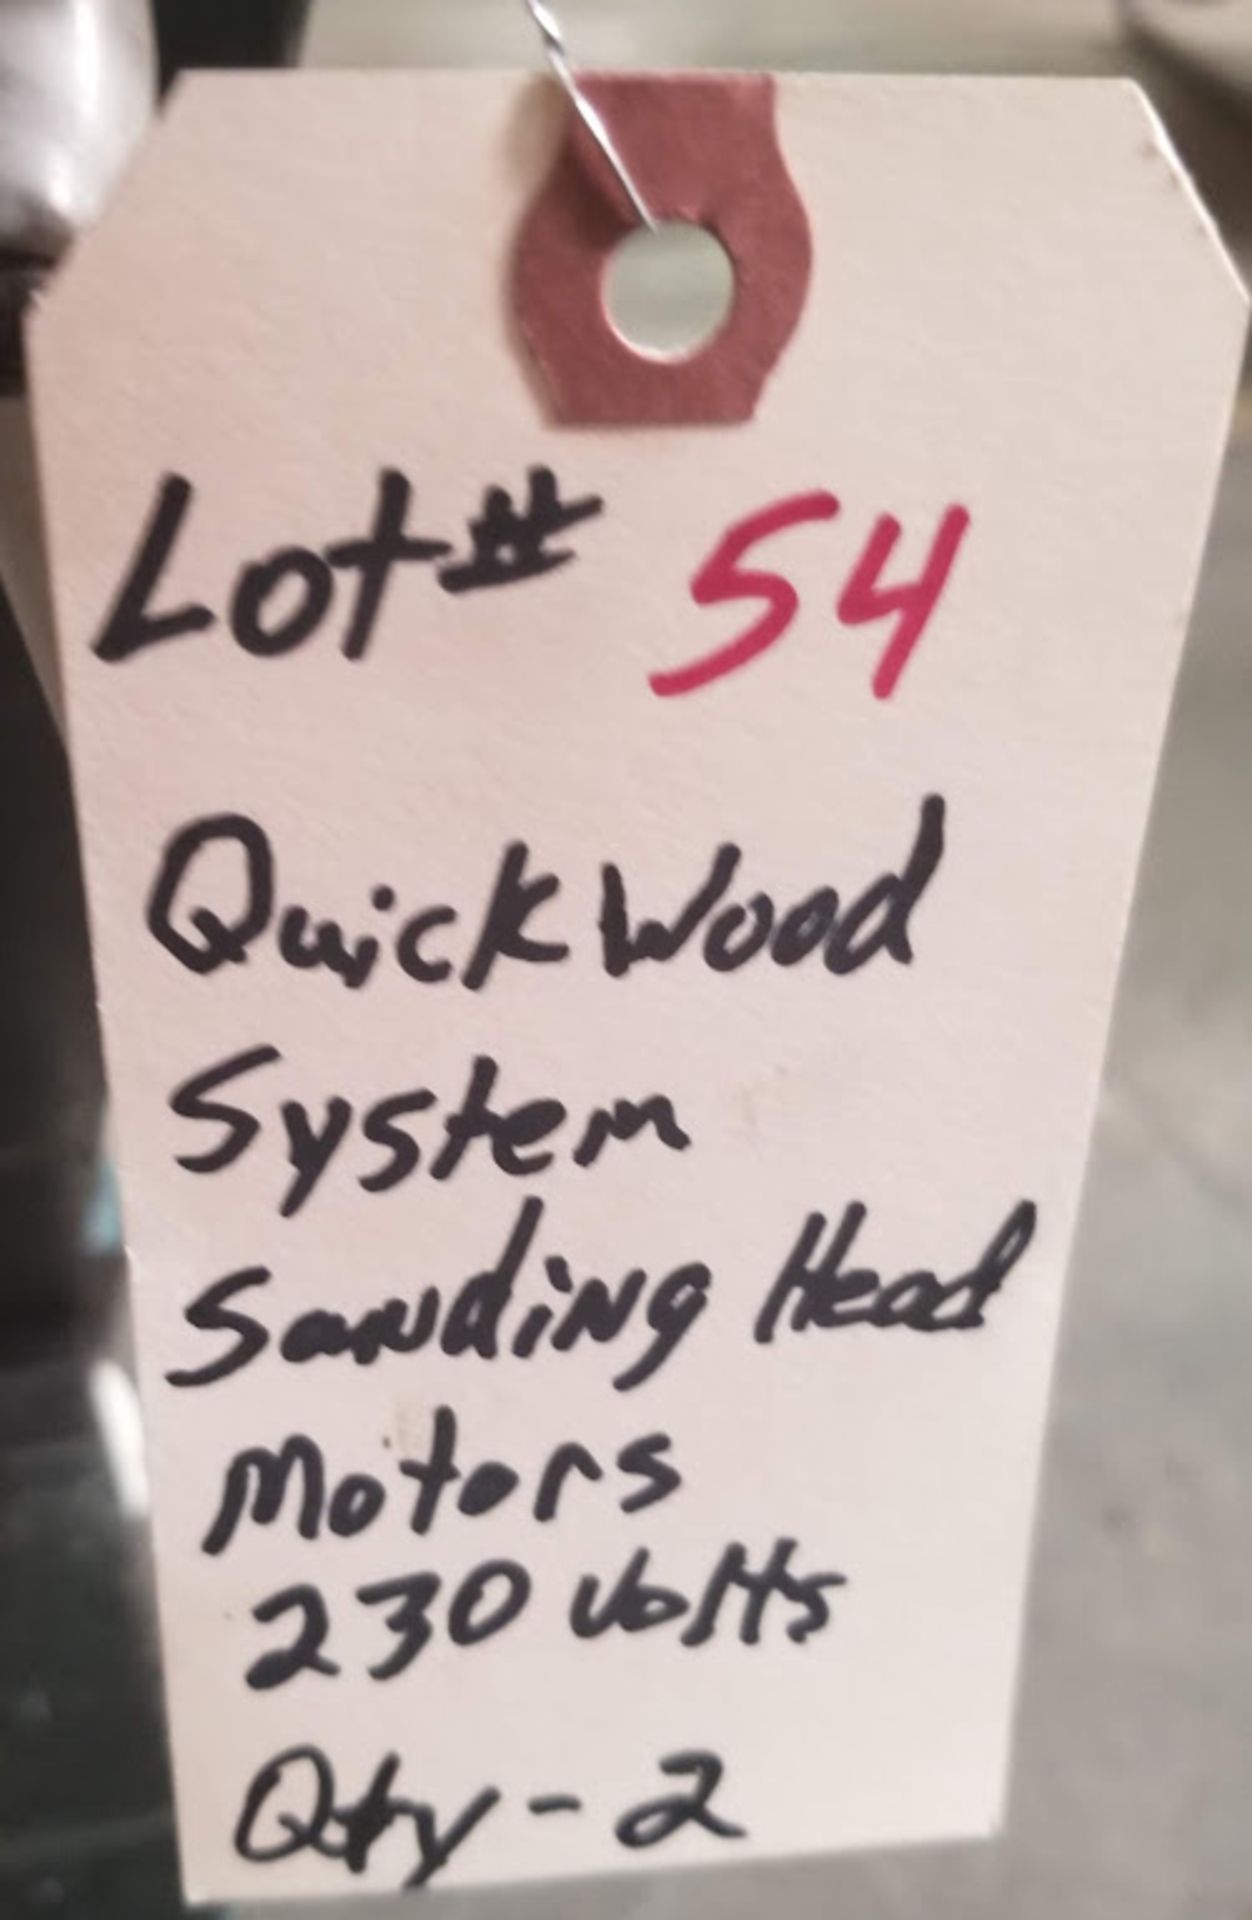 Quick Wood System Sanding Head Motors, 230 Volts (Qty 2) - Image 2 of 2